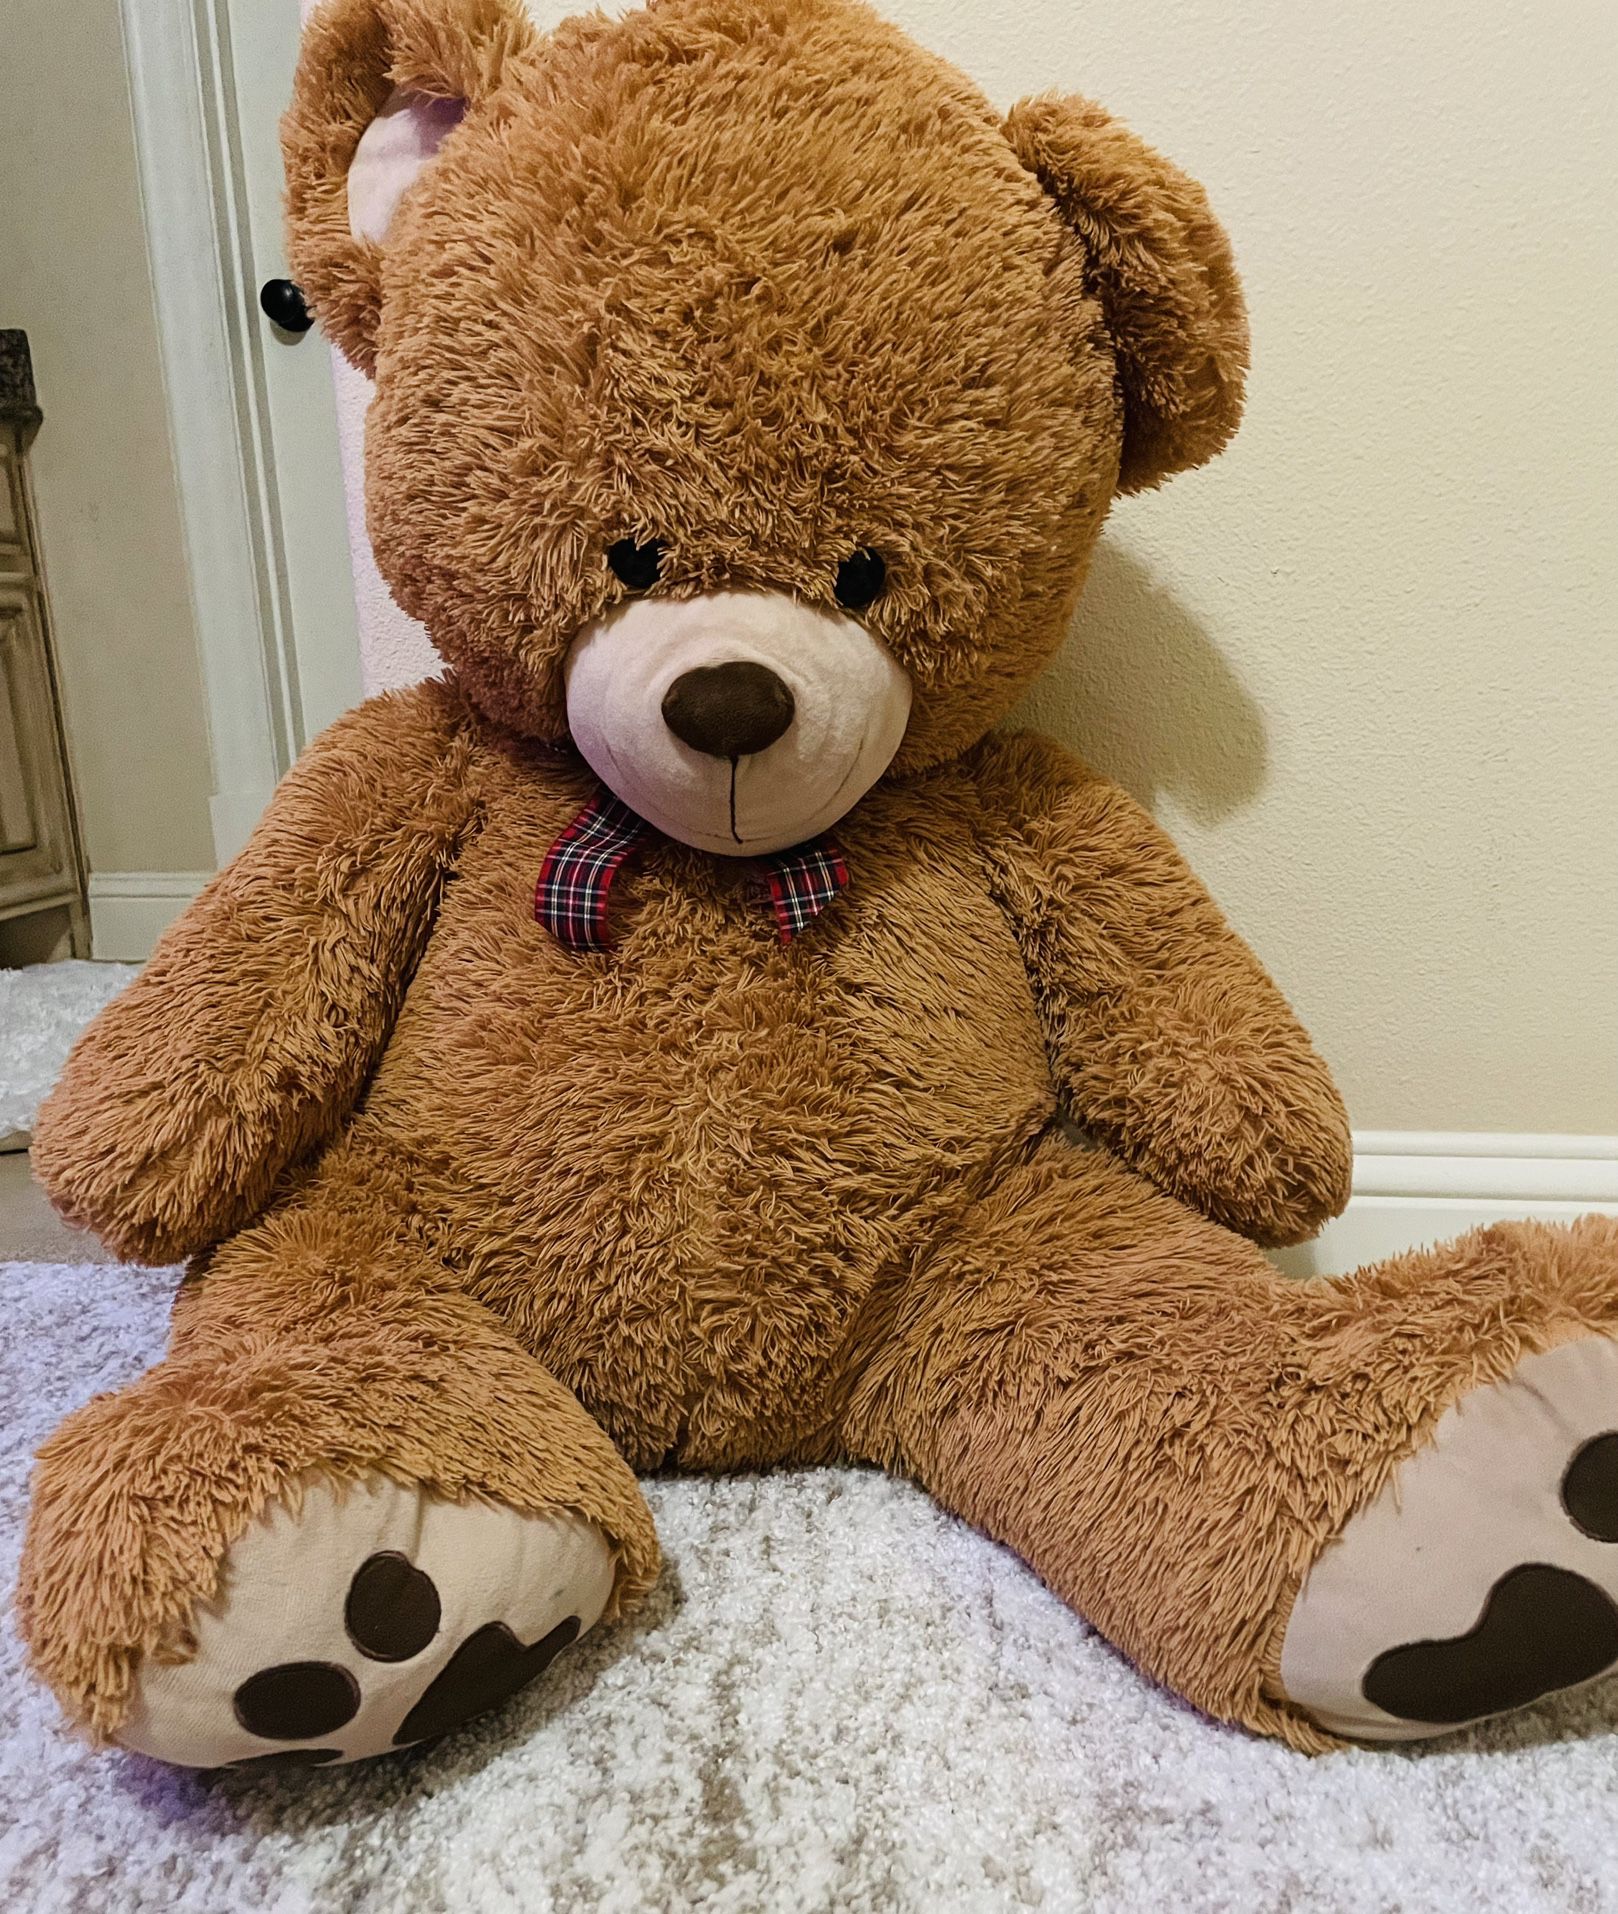 BIG teddy bear 